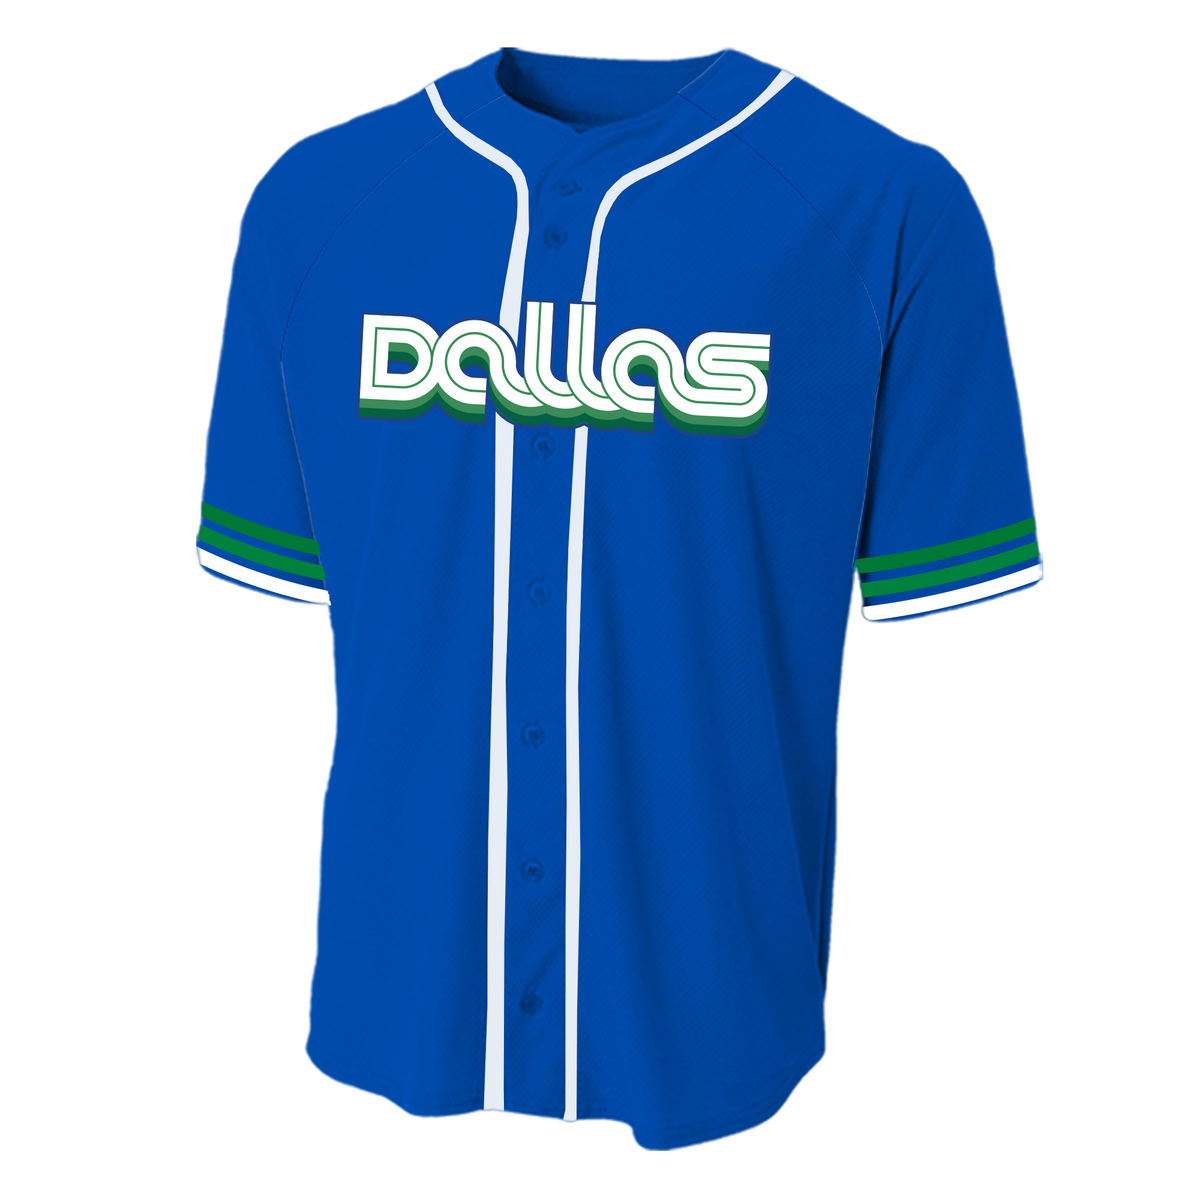 Baseball Jerseys for sale in Dallas, Texas